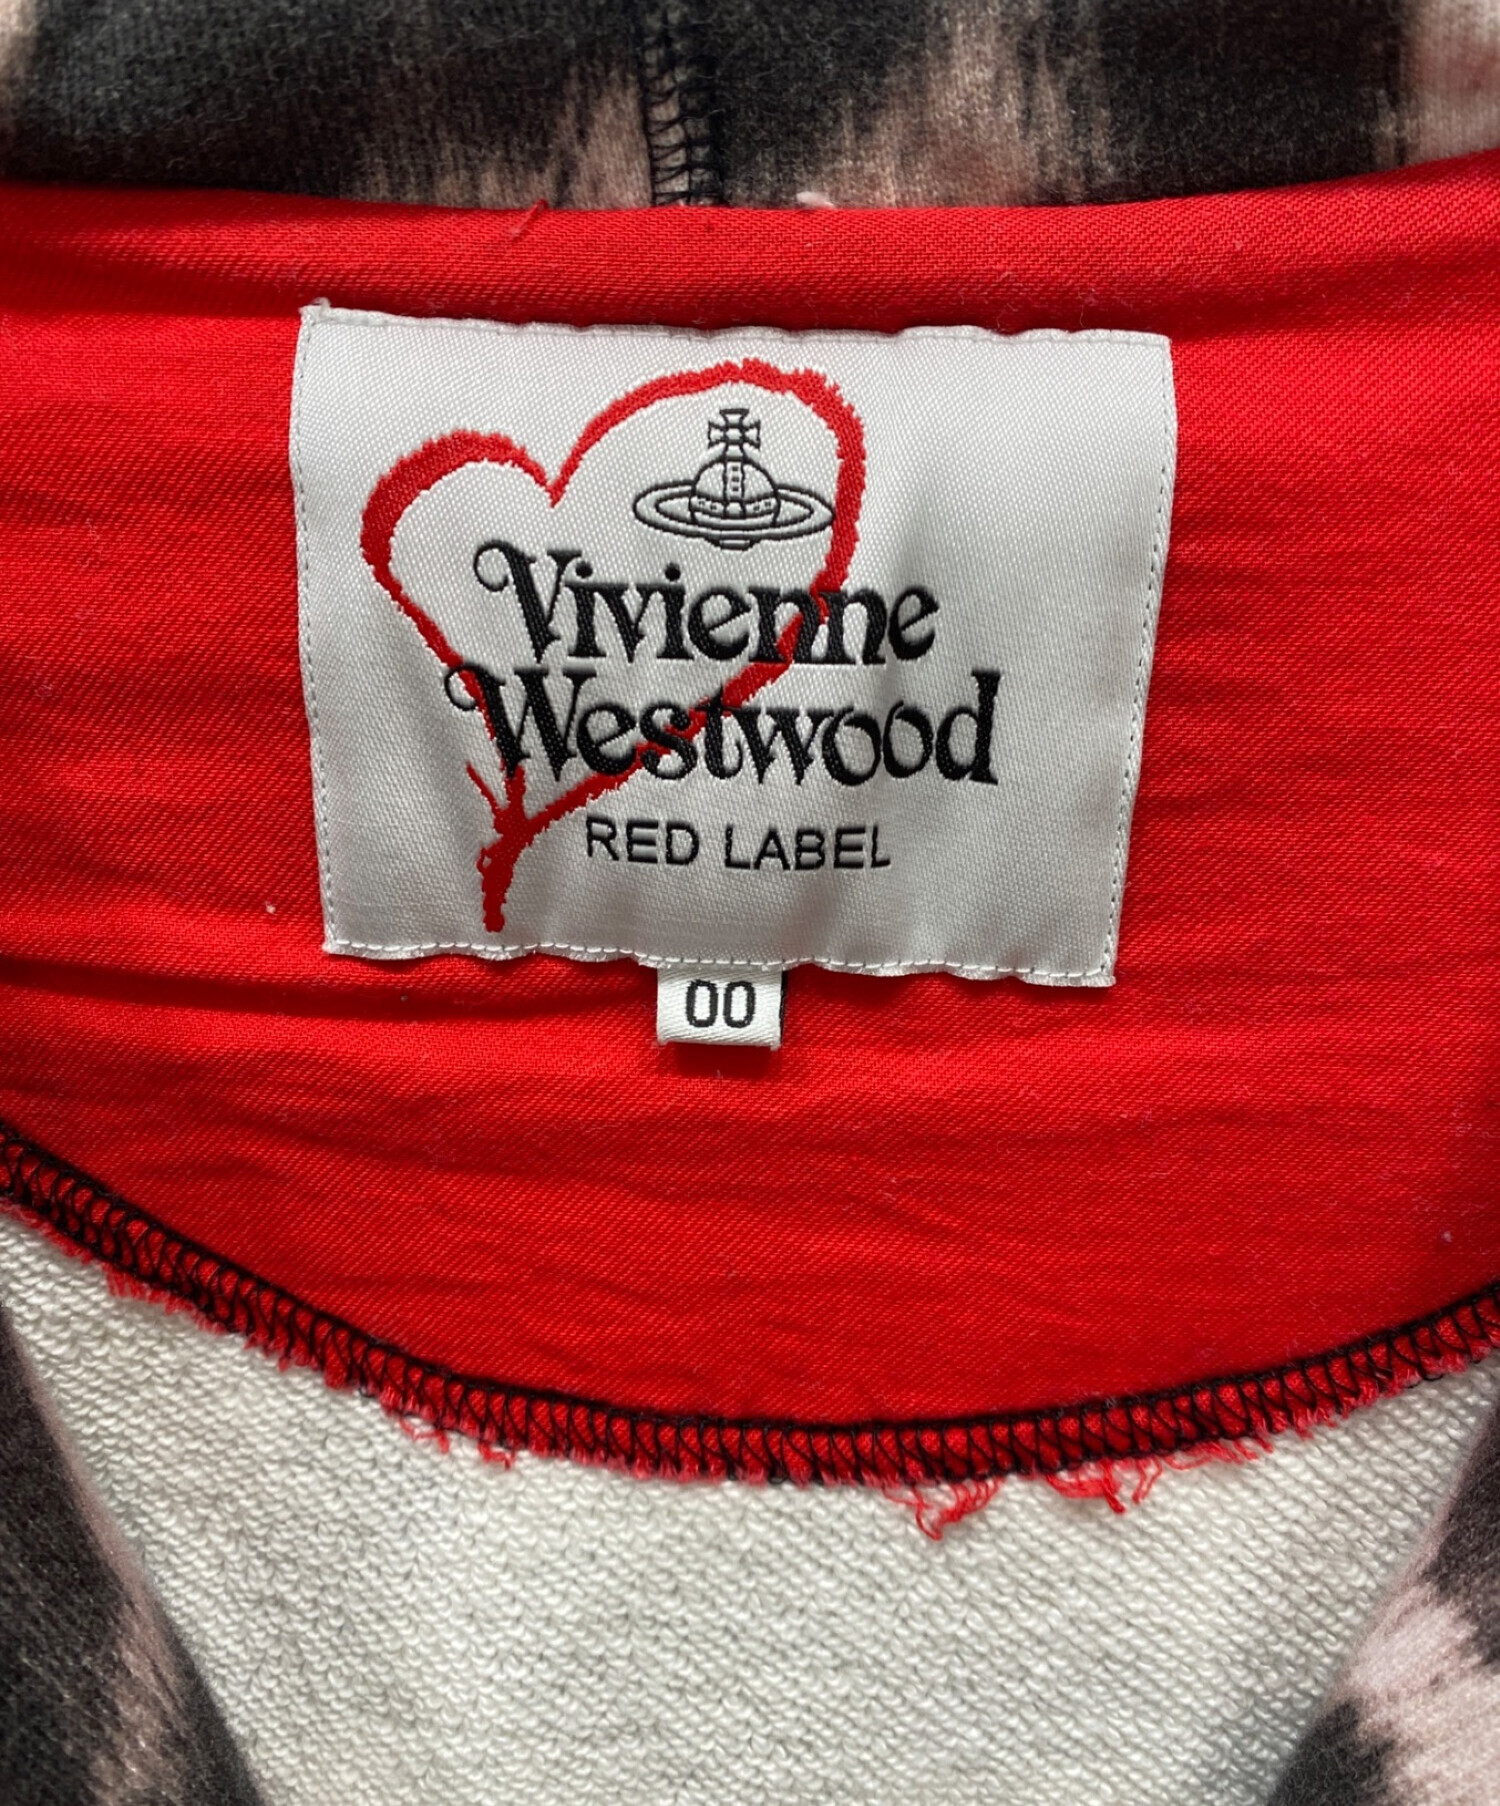 Vivienne Westwood RED LABEL (ヴィヴィアンウエストウッドレッドレーベル) アニマルハート柄ショートパーカー  ブラック×ピンク サイズ:00